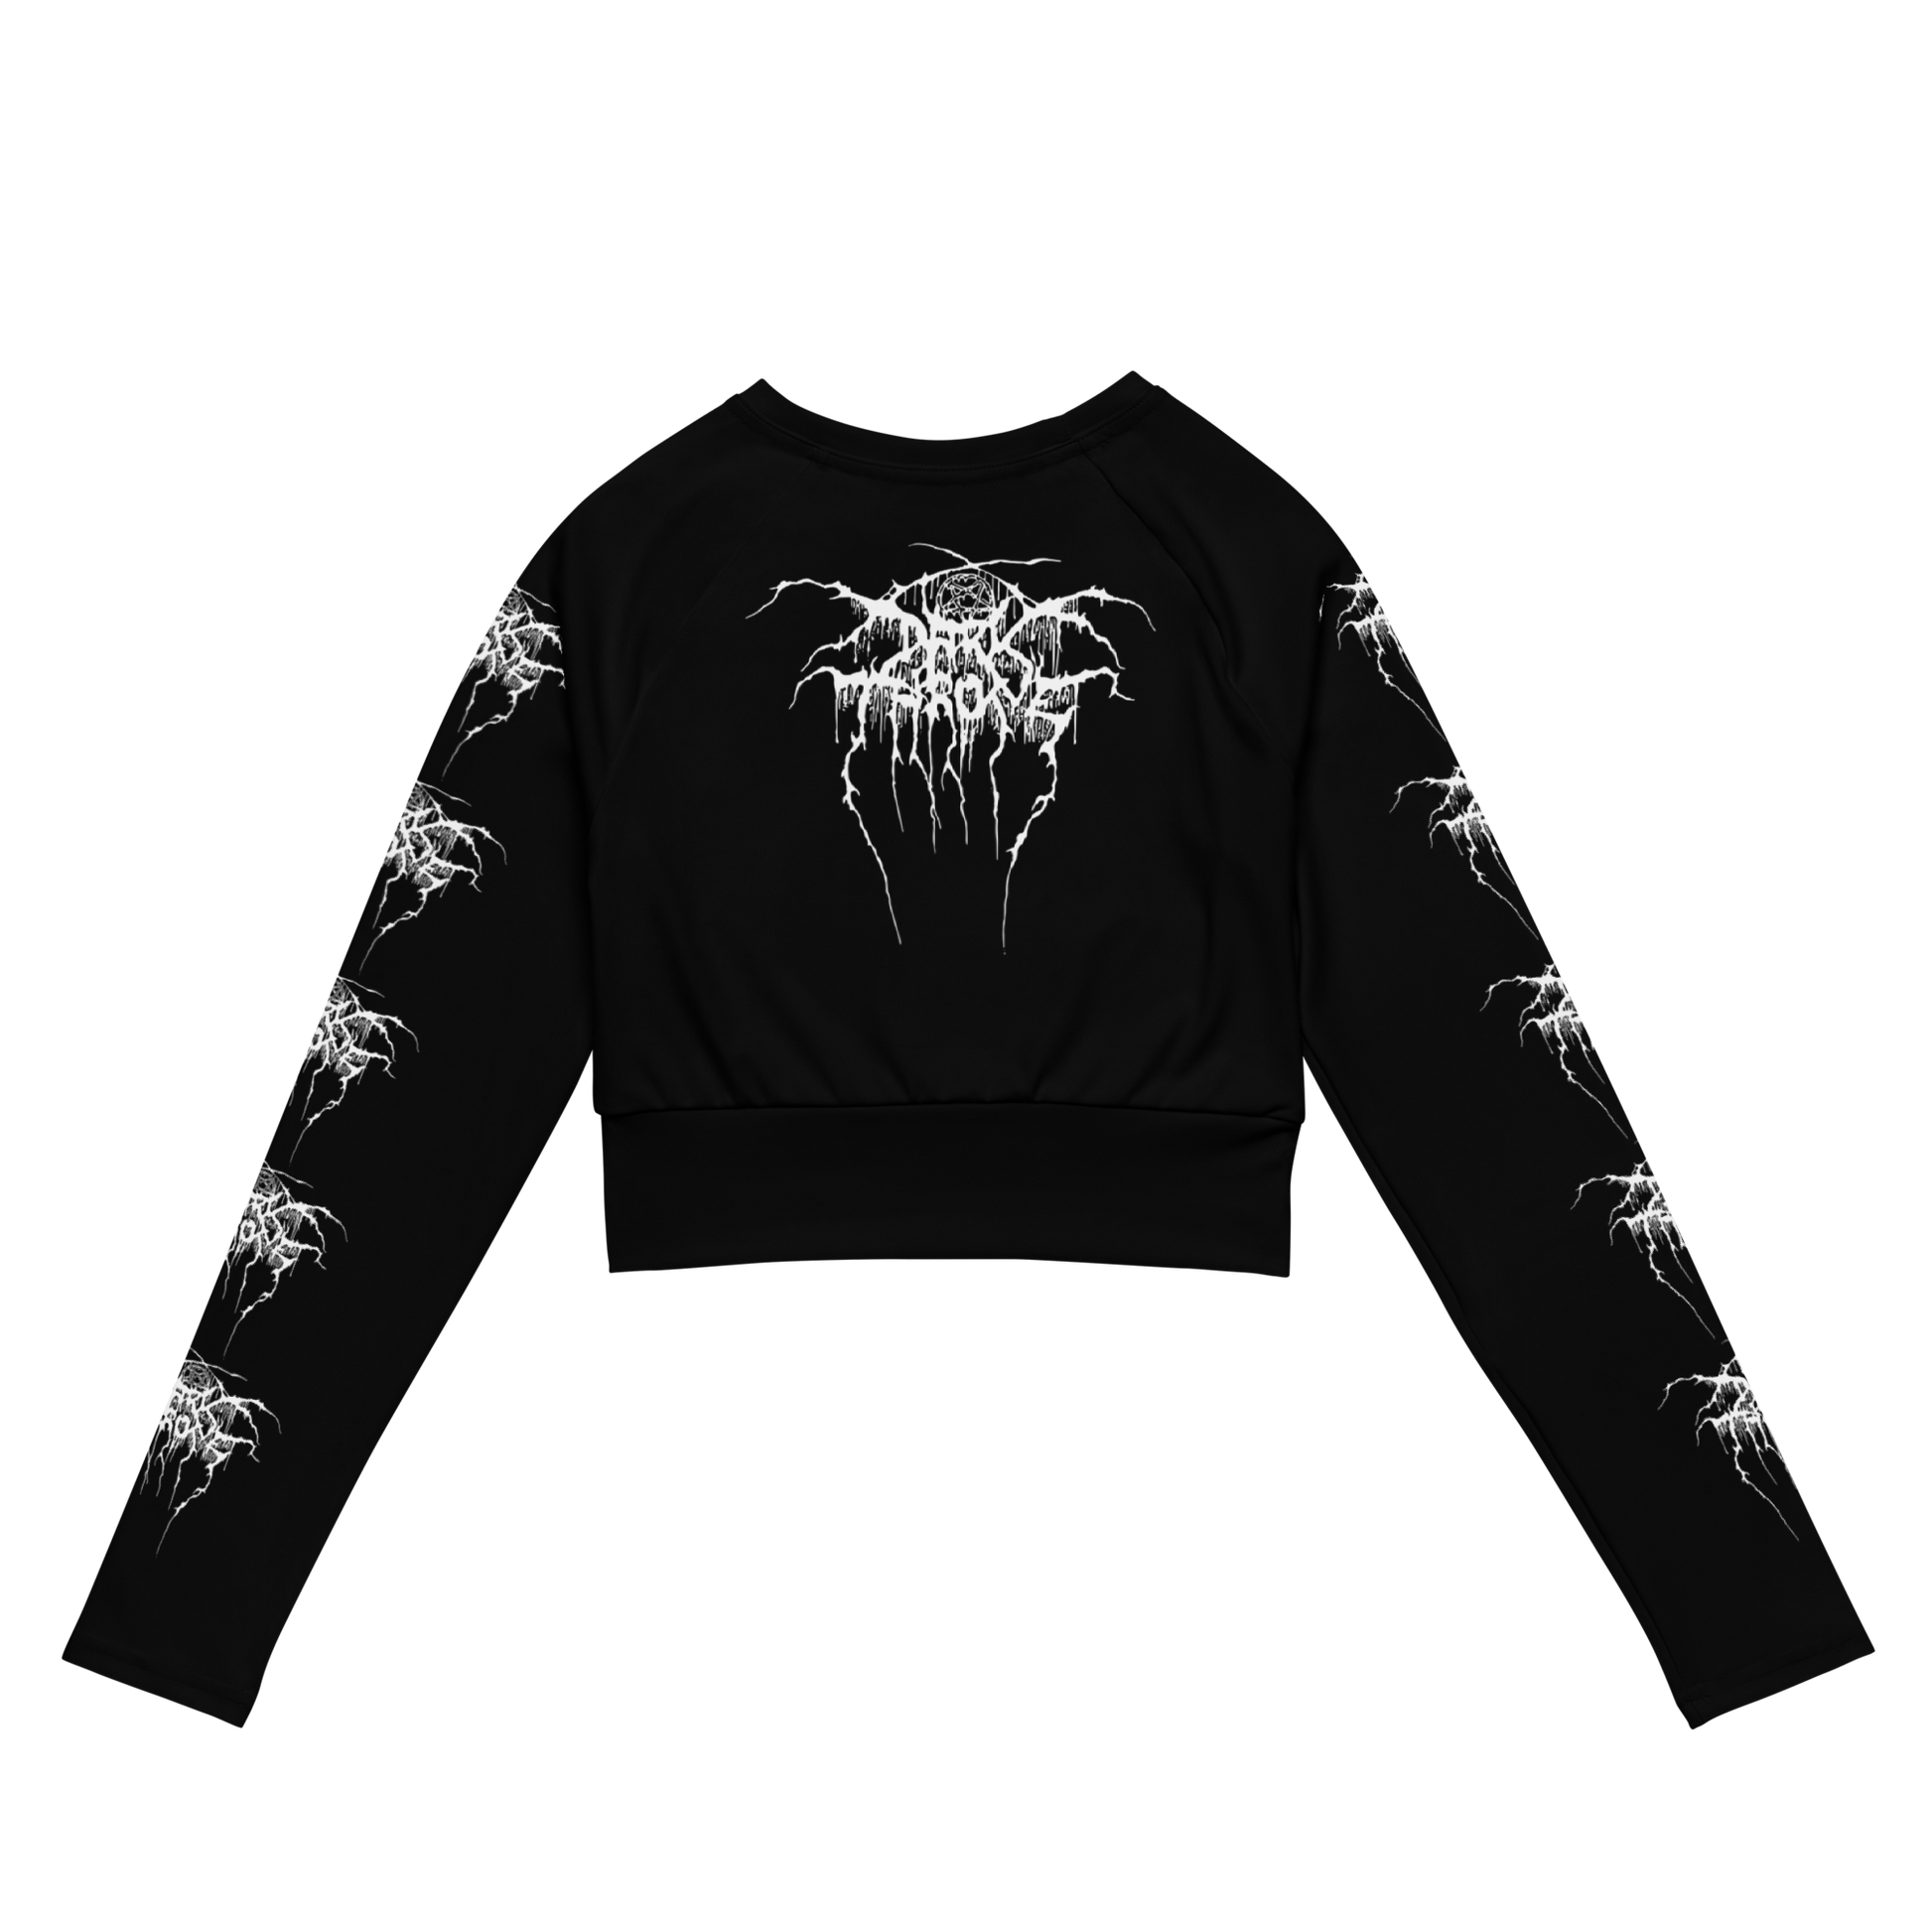 Darkthrone Total Death official long sleeve crop top by Metal Mistress